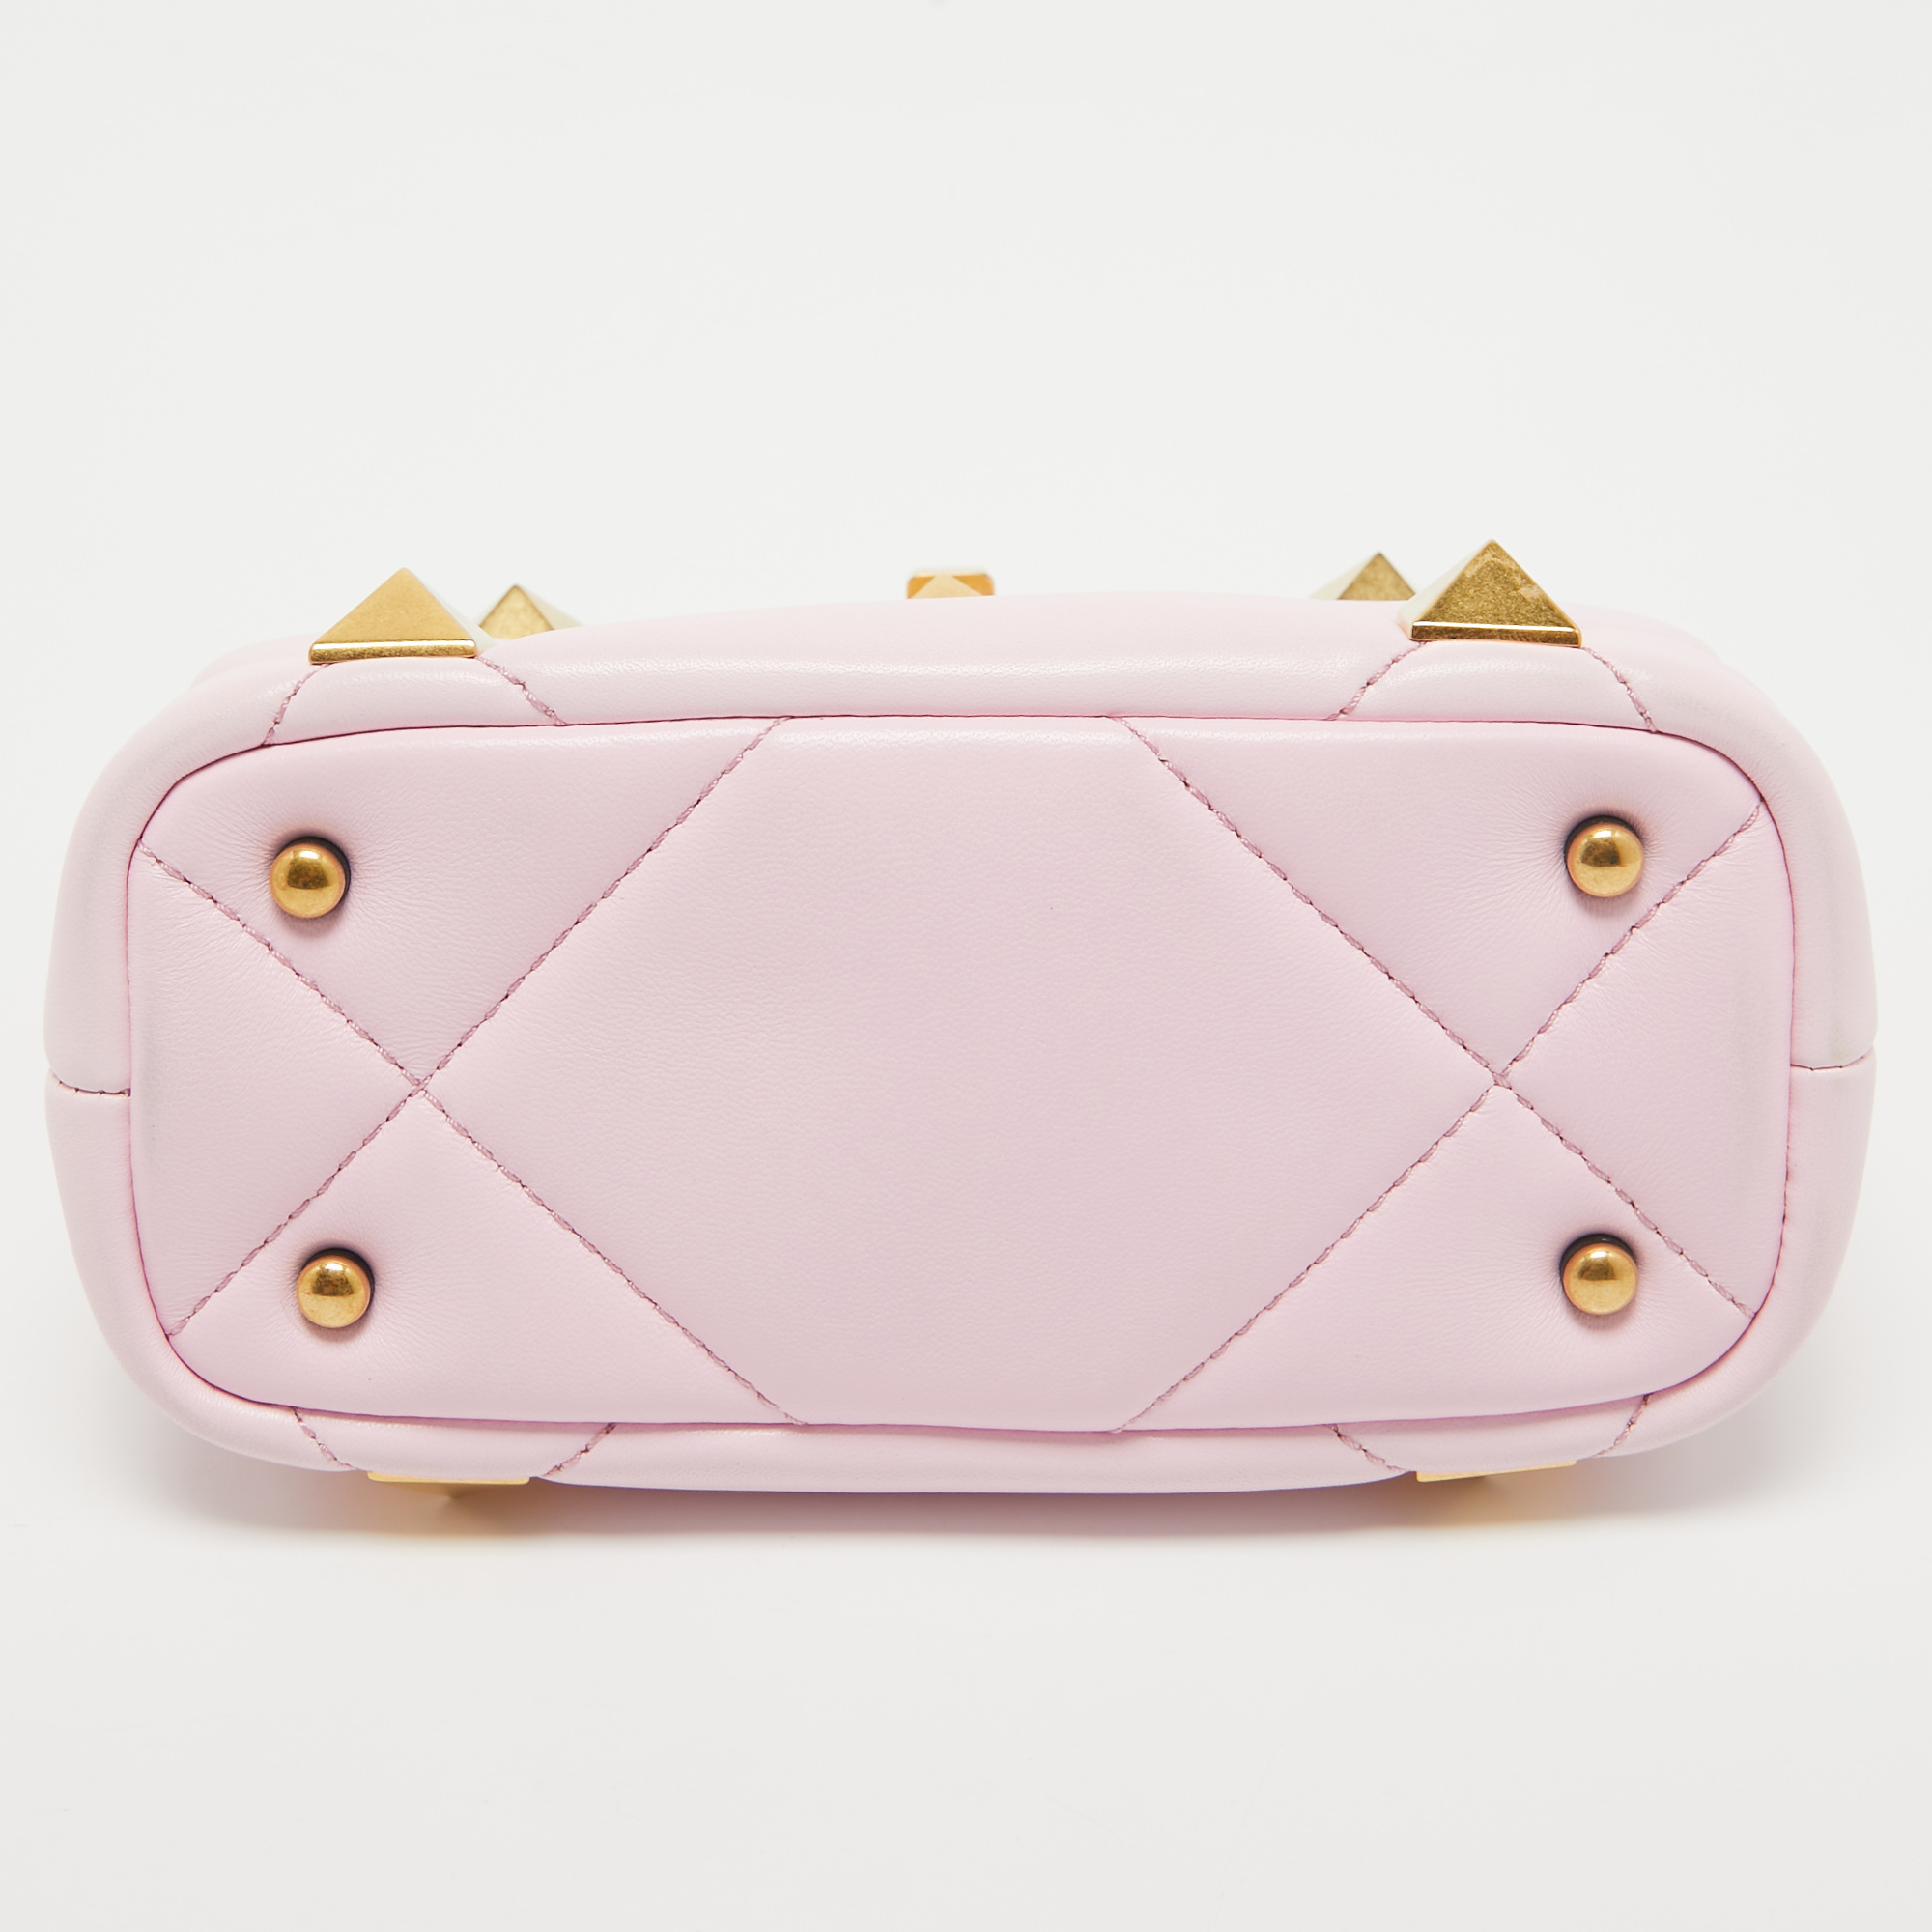 Valentino Pink Leather Mini Roman Stud Top Handle Bag